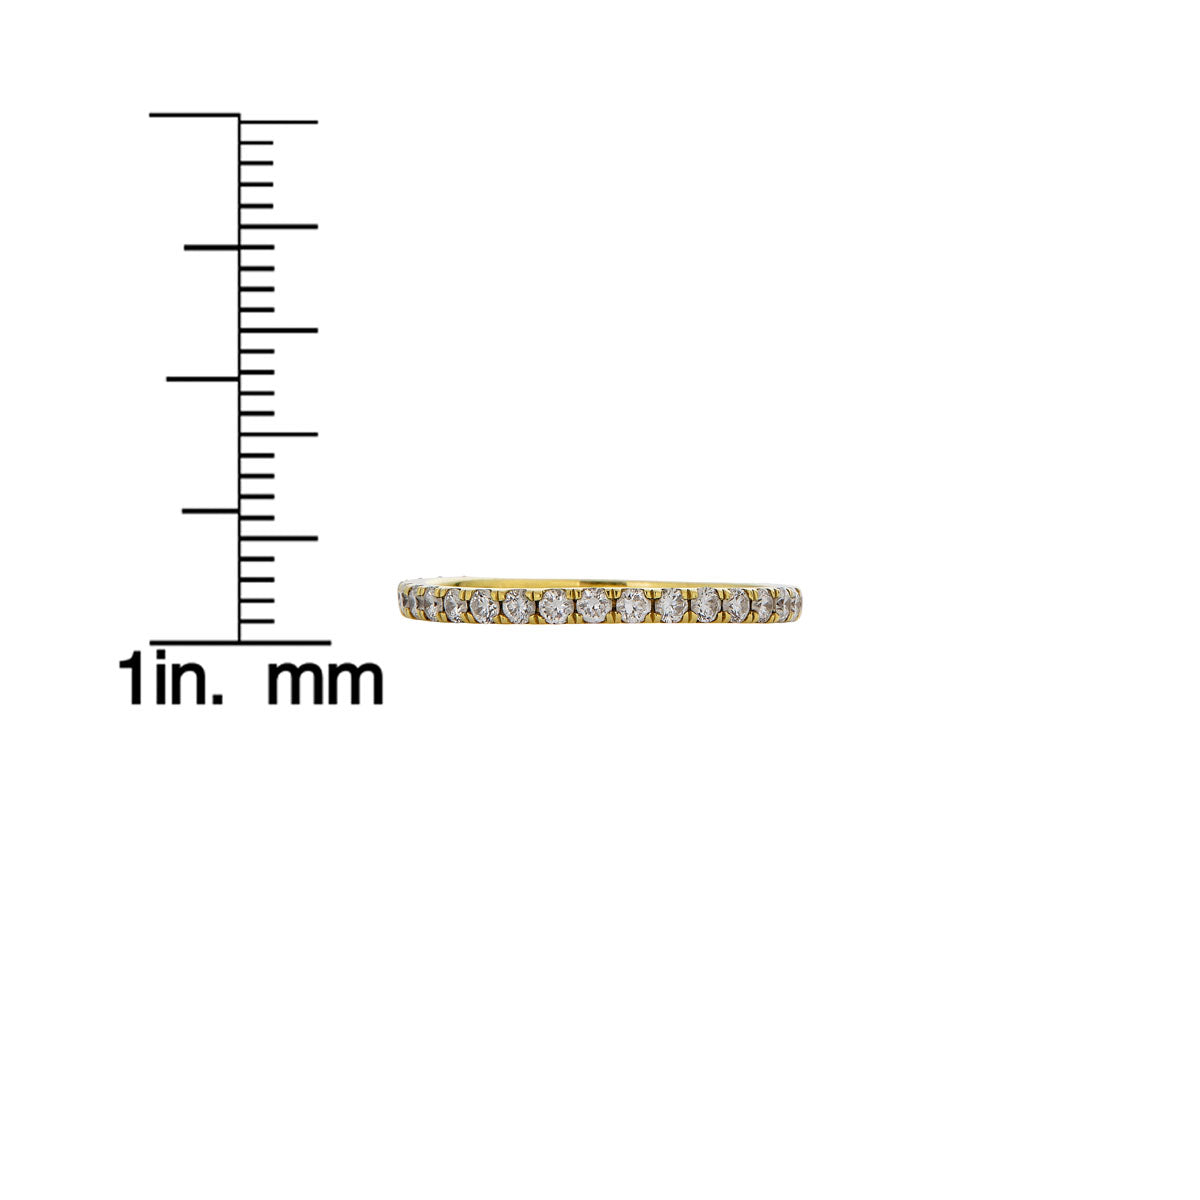 2pt diamond gold eternity band measurement